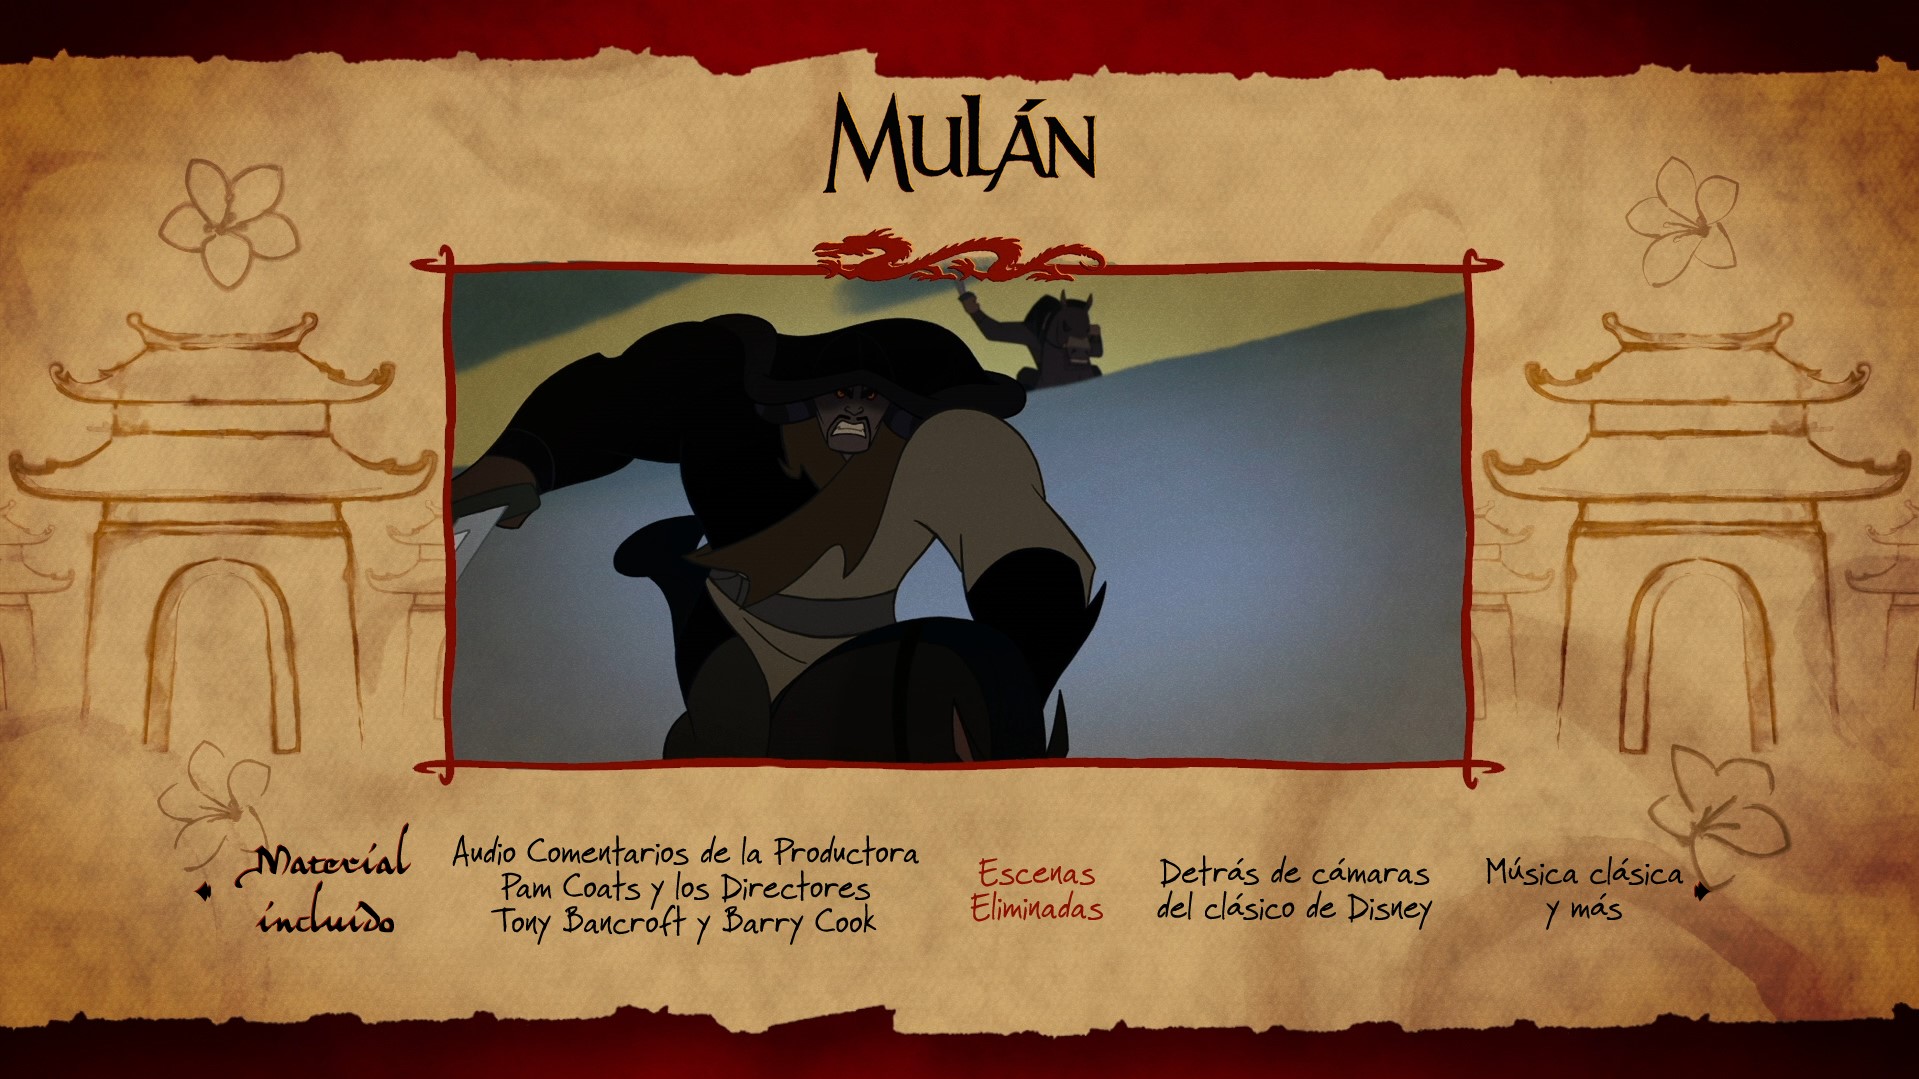 Mulán 1-2 (1998-2004) 1080p BD50 Latino - Ingles